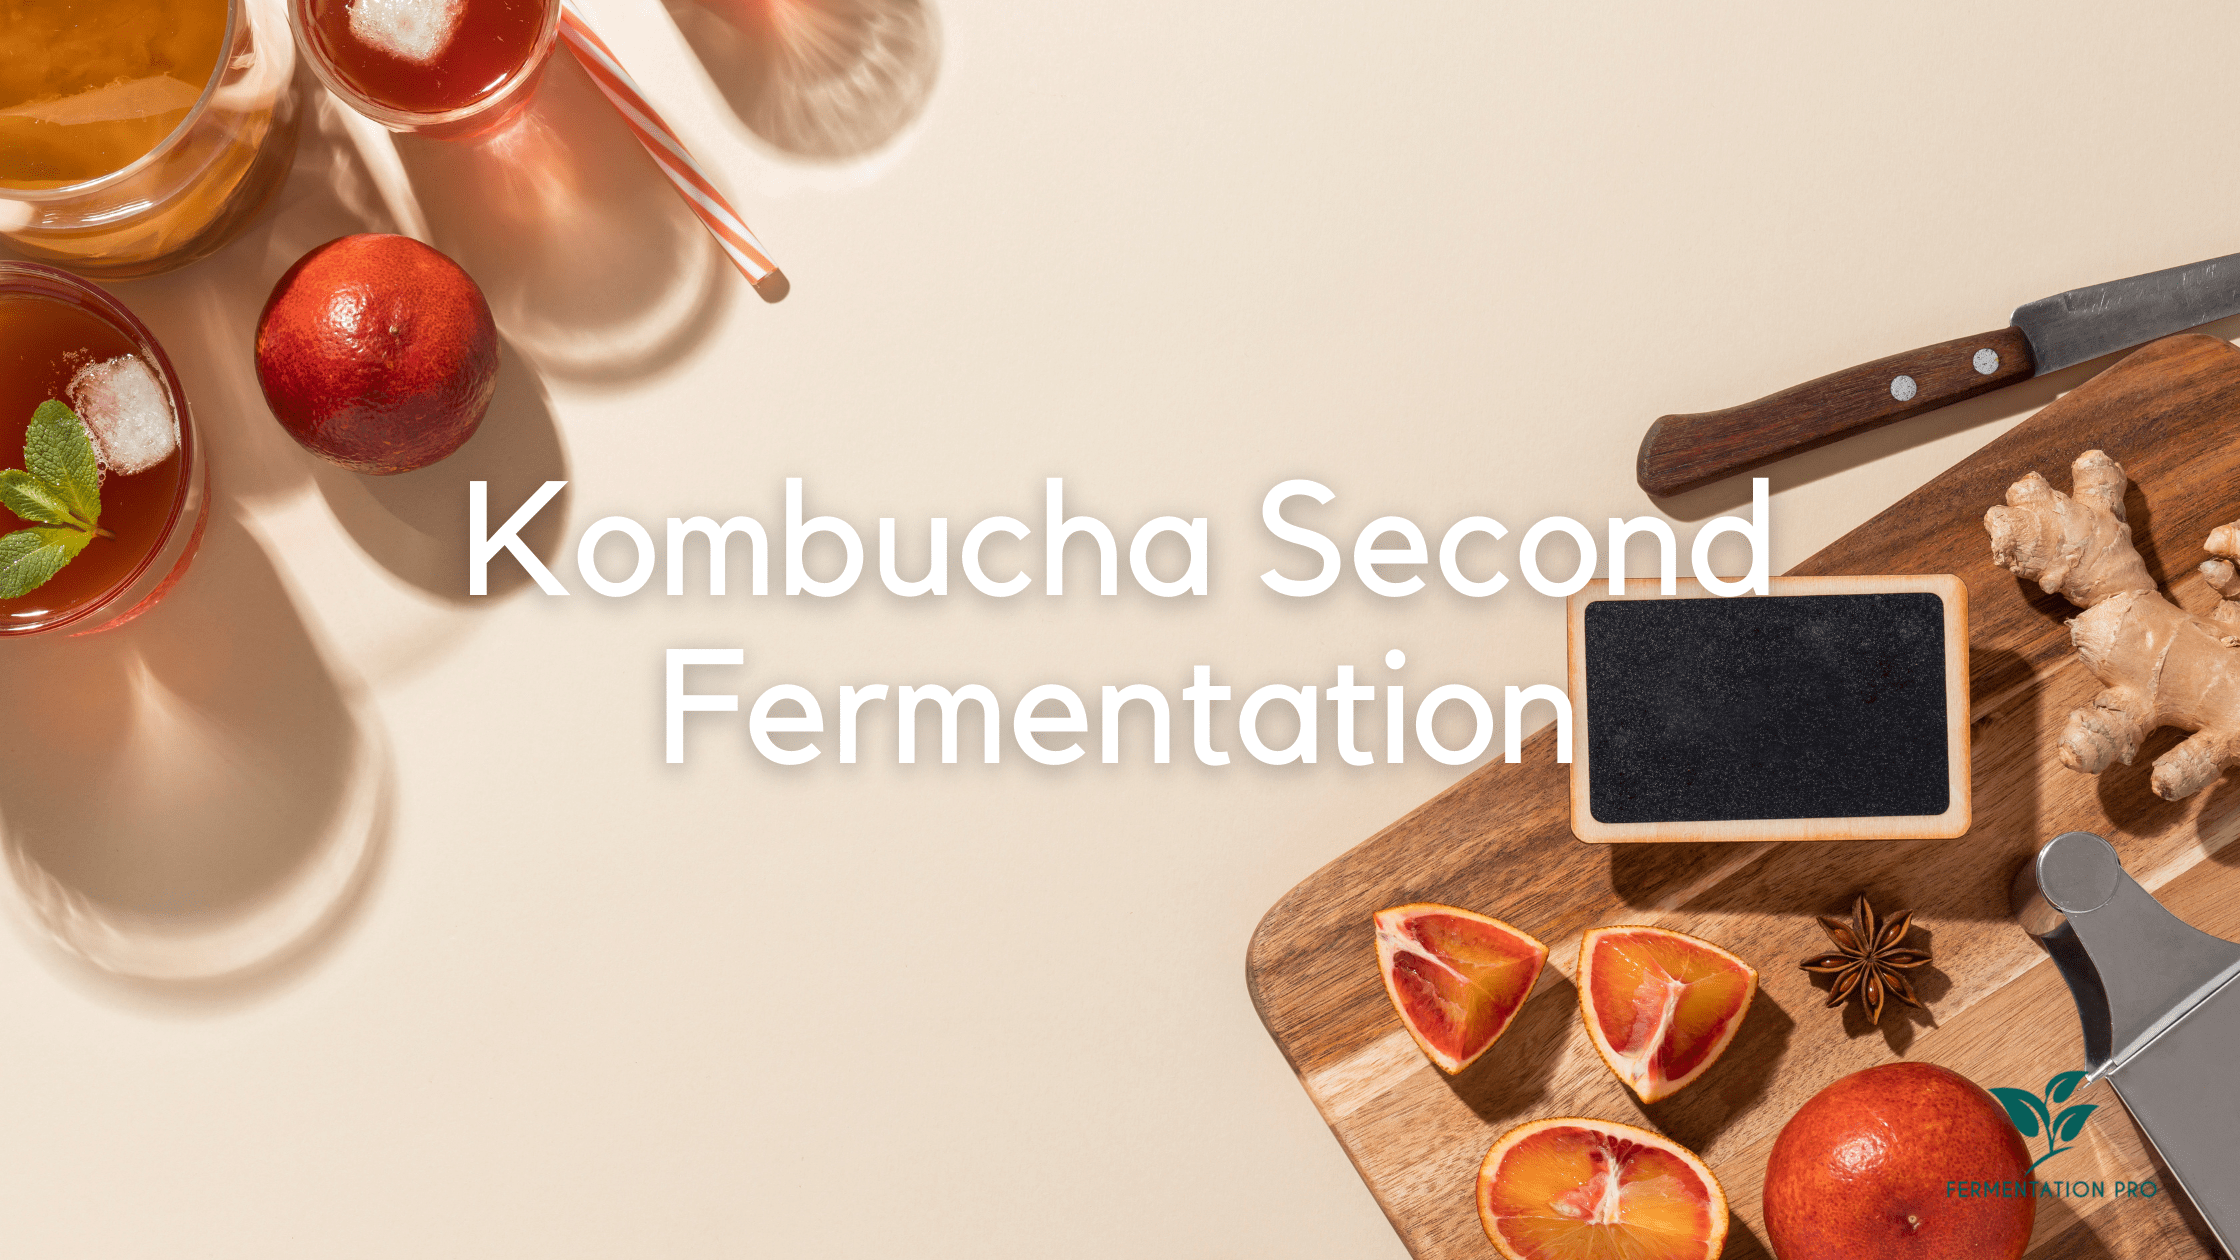 Www Xxx School Girl And Horsh Boy - Kombucha Second Fermentation - Fermentation Pro